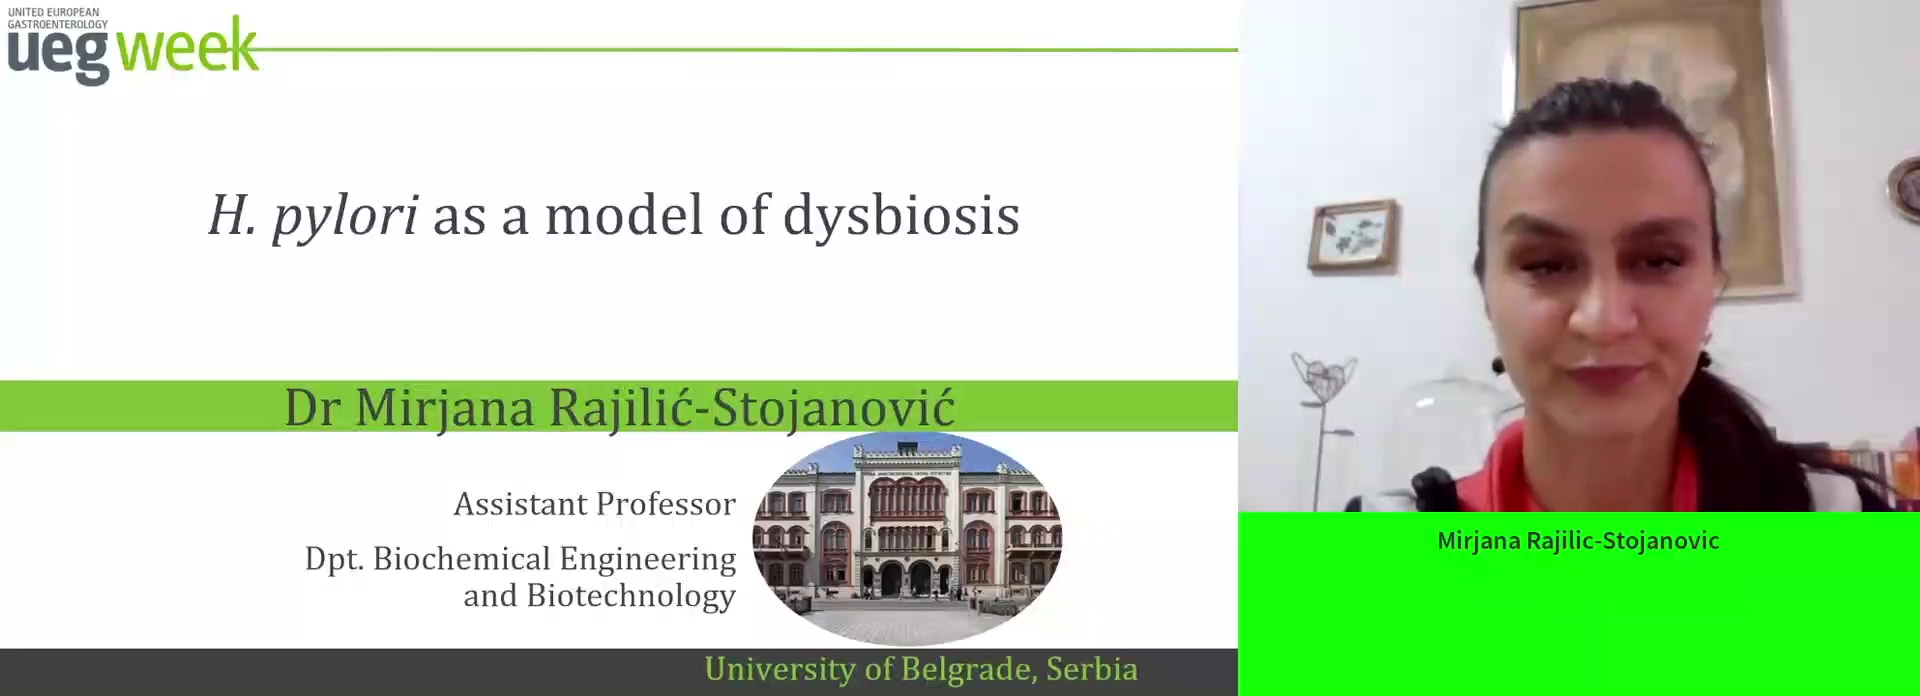 H. pylori as a model of dysbiosis